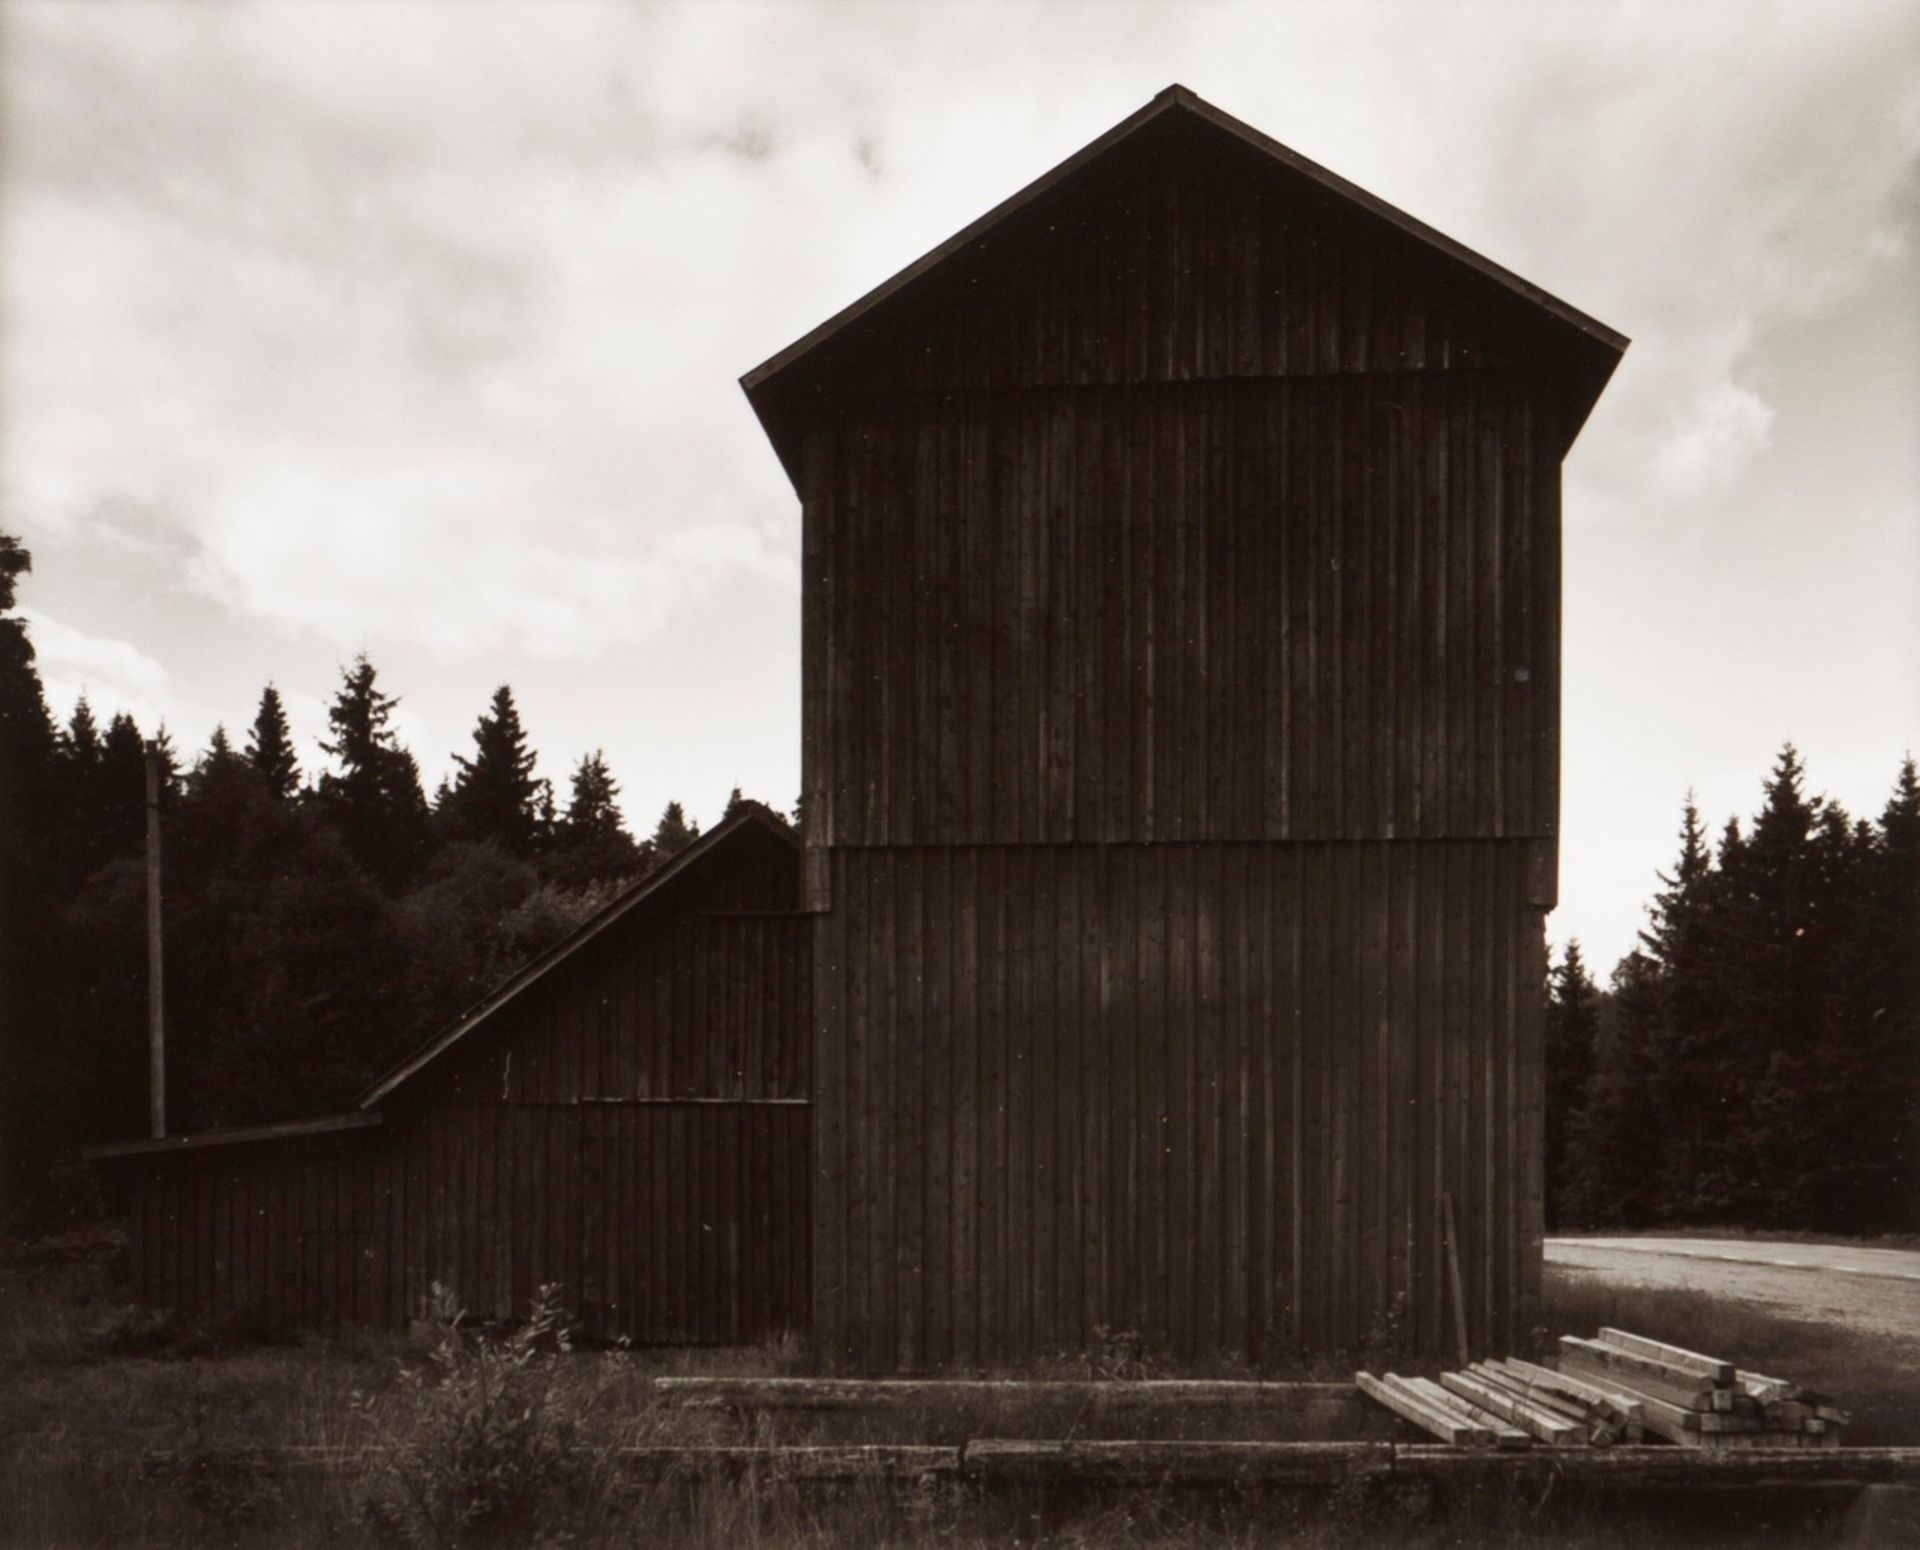 Per Bak Jensen (Denmark, b.1949)
"Savvaerik"
Black and white photograph
Signed, dated 01 and